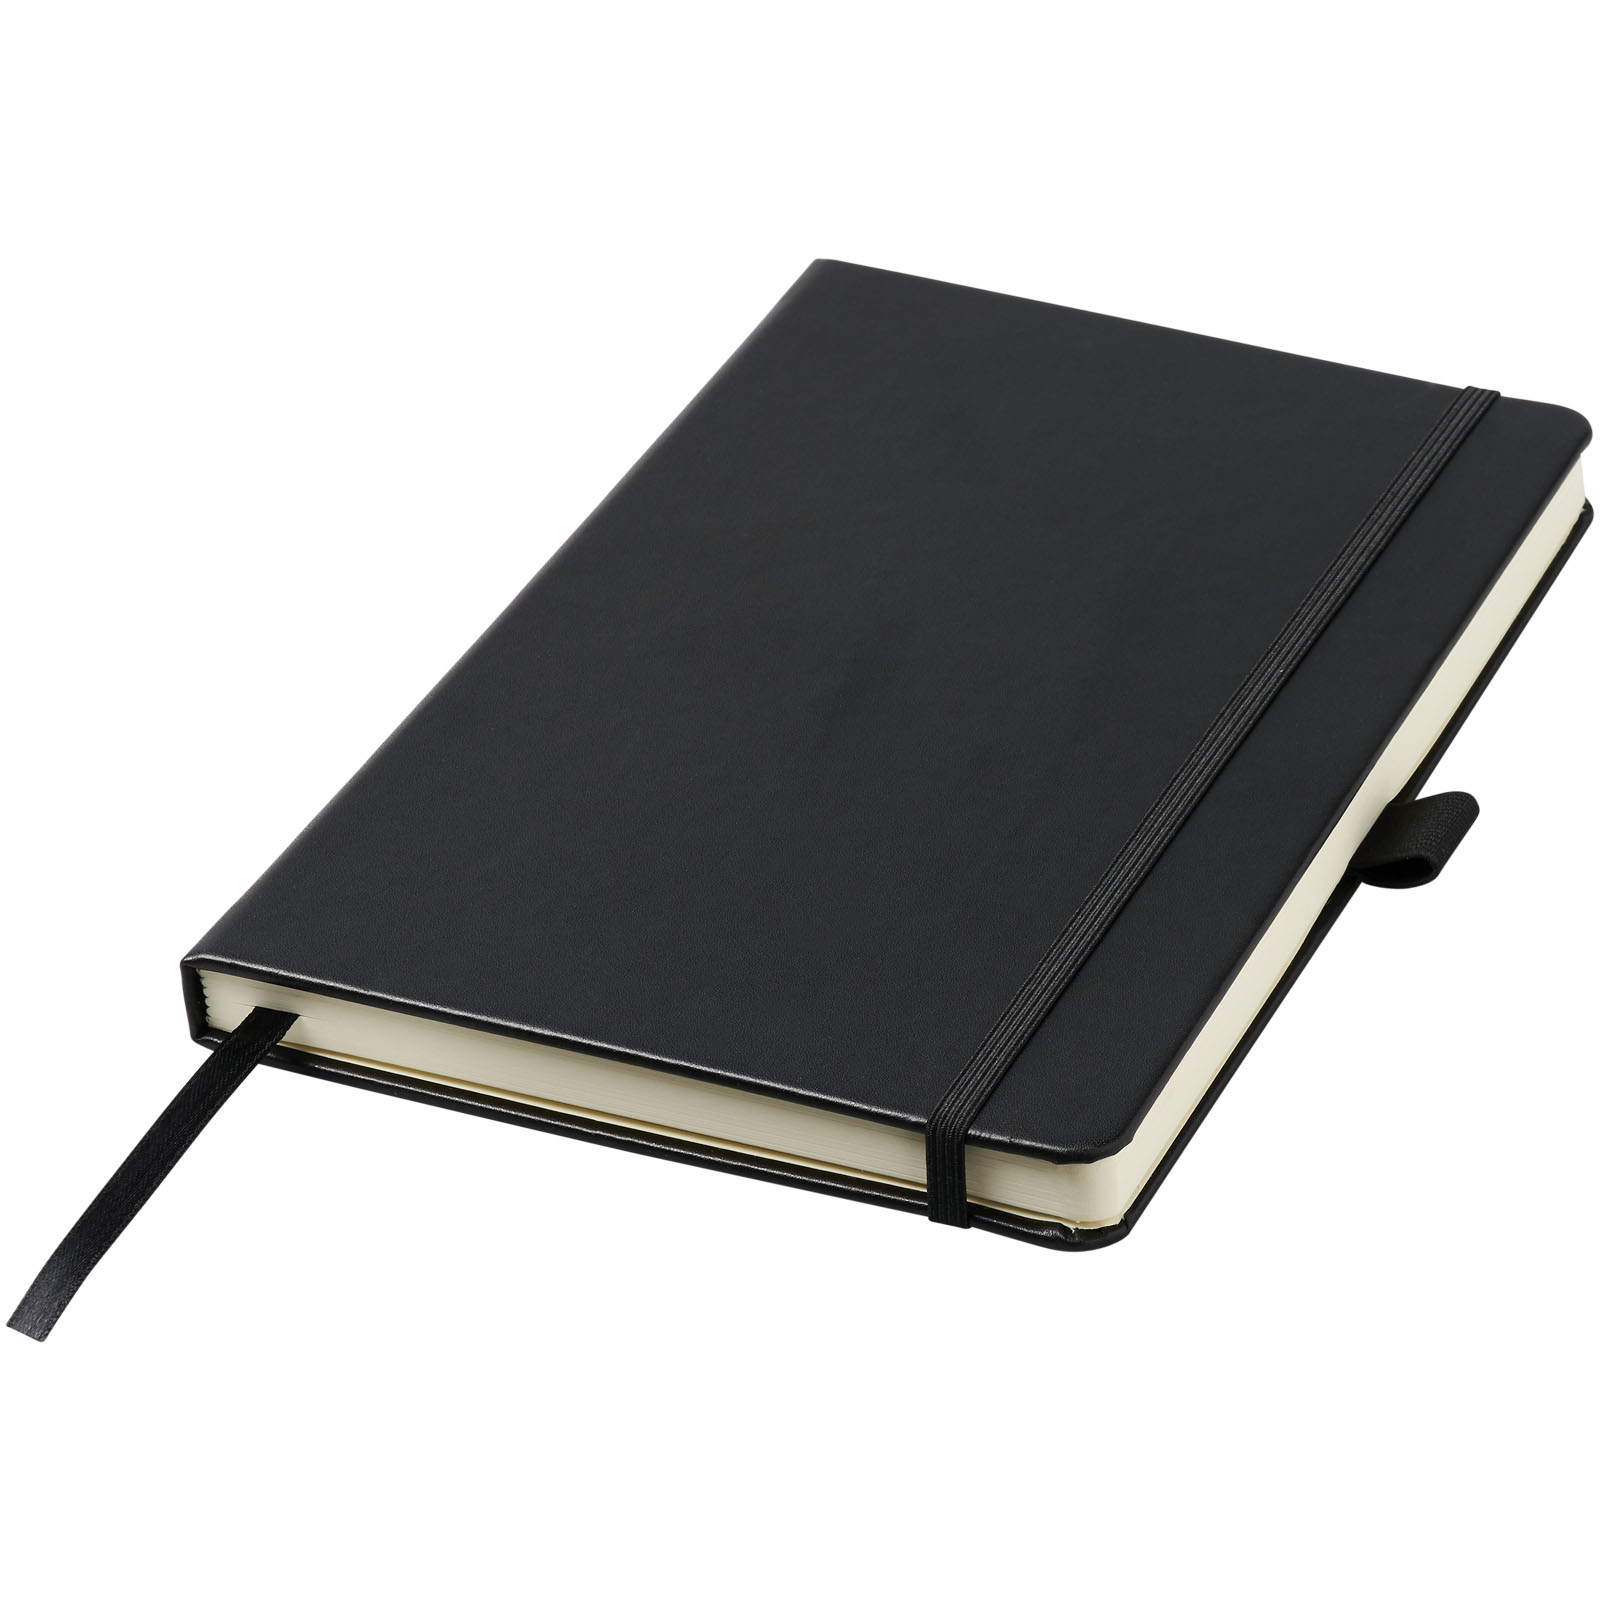 Advertising Hard cover notebooks - Nova A5 bound notebook